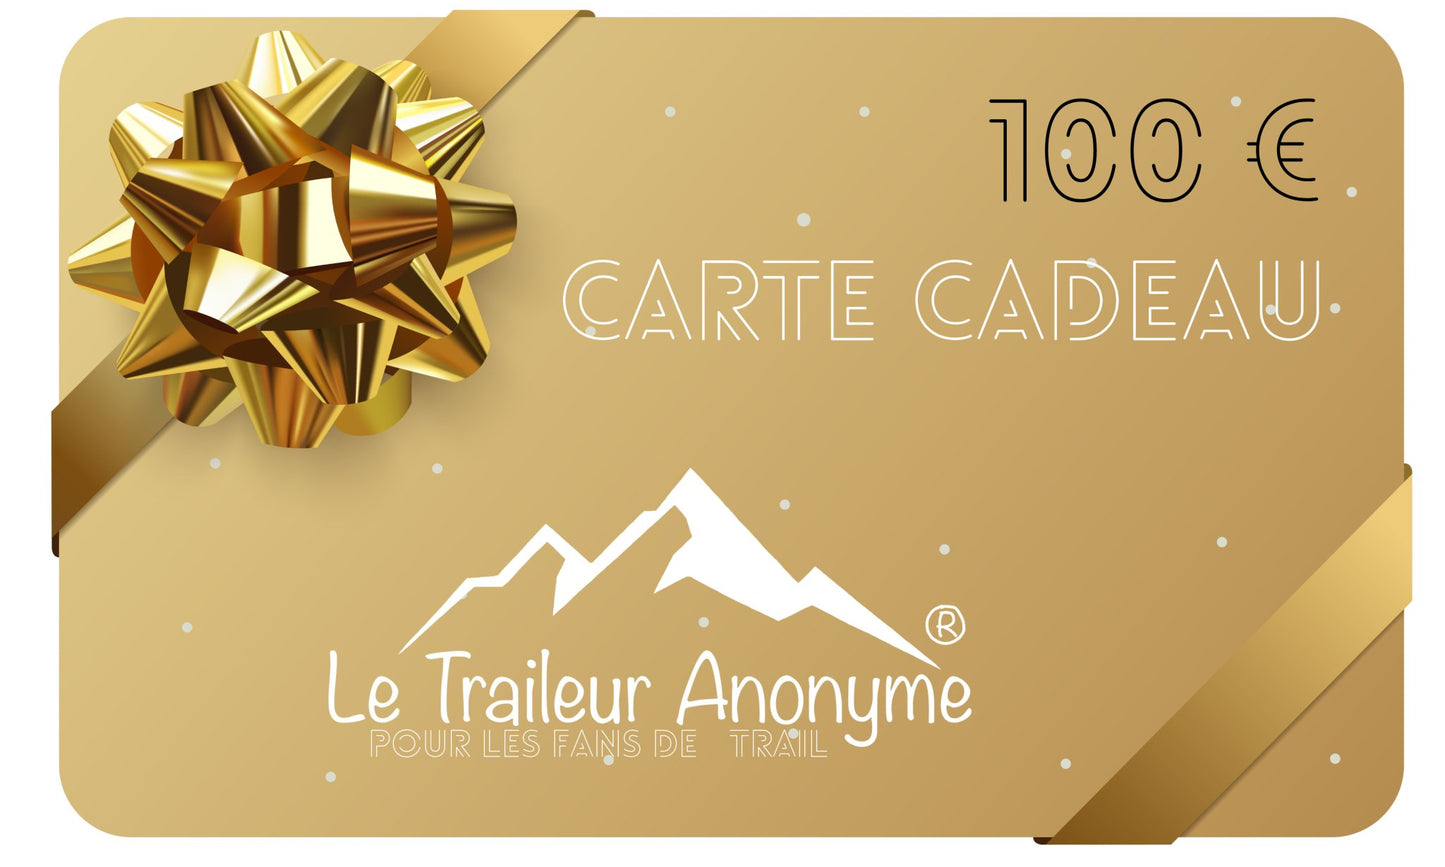 Carte Cadeau - Le Traileur Anonyme - Le Traileur Anonyme